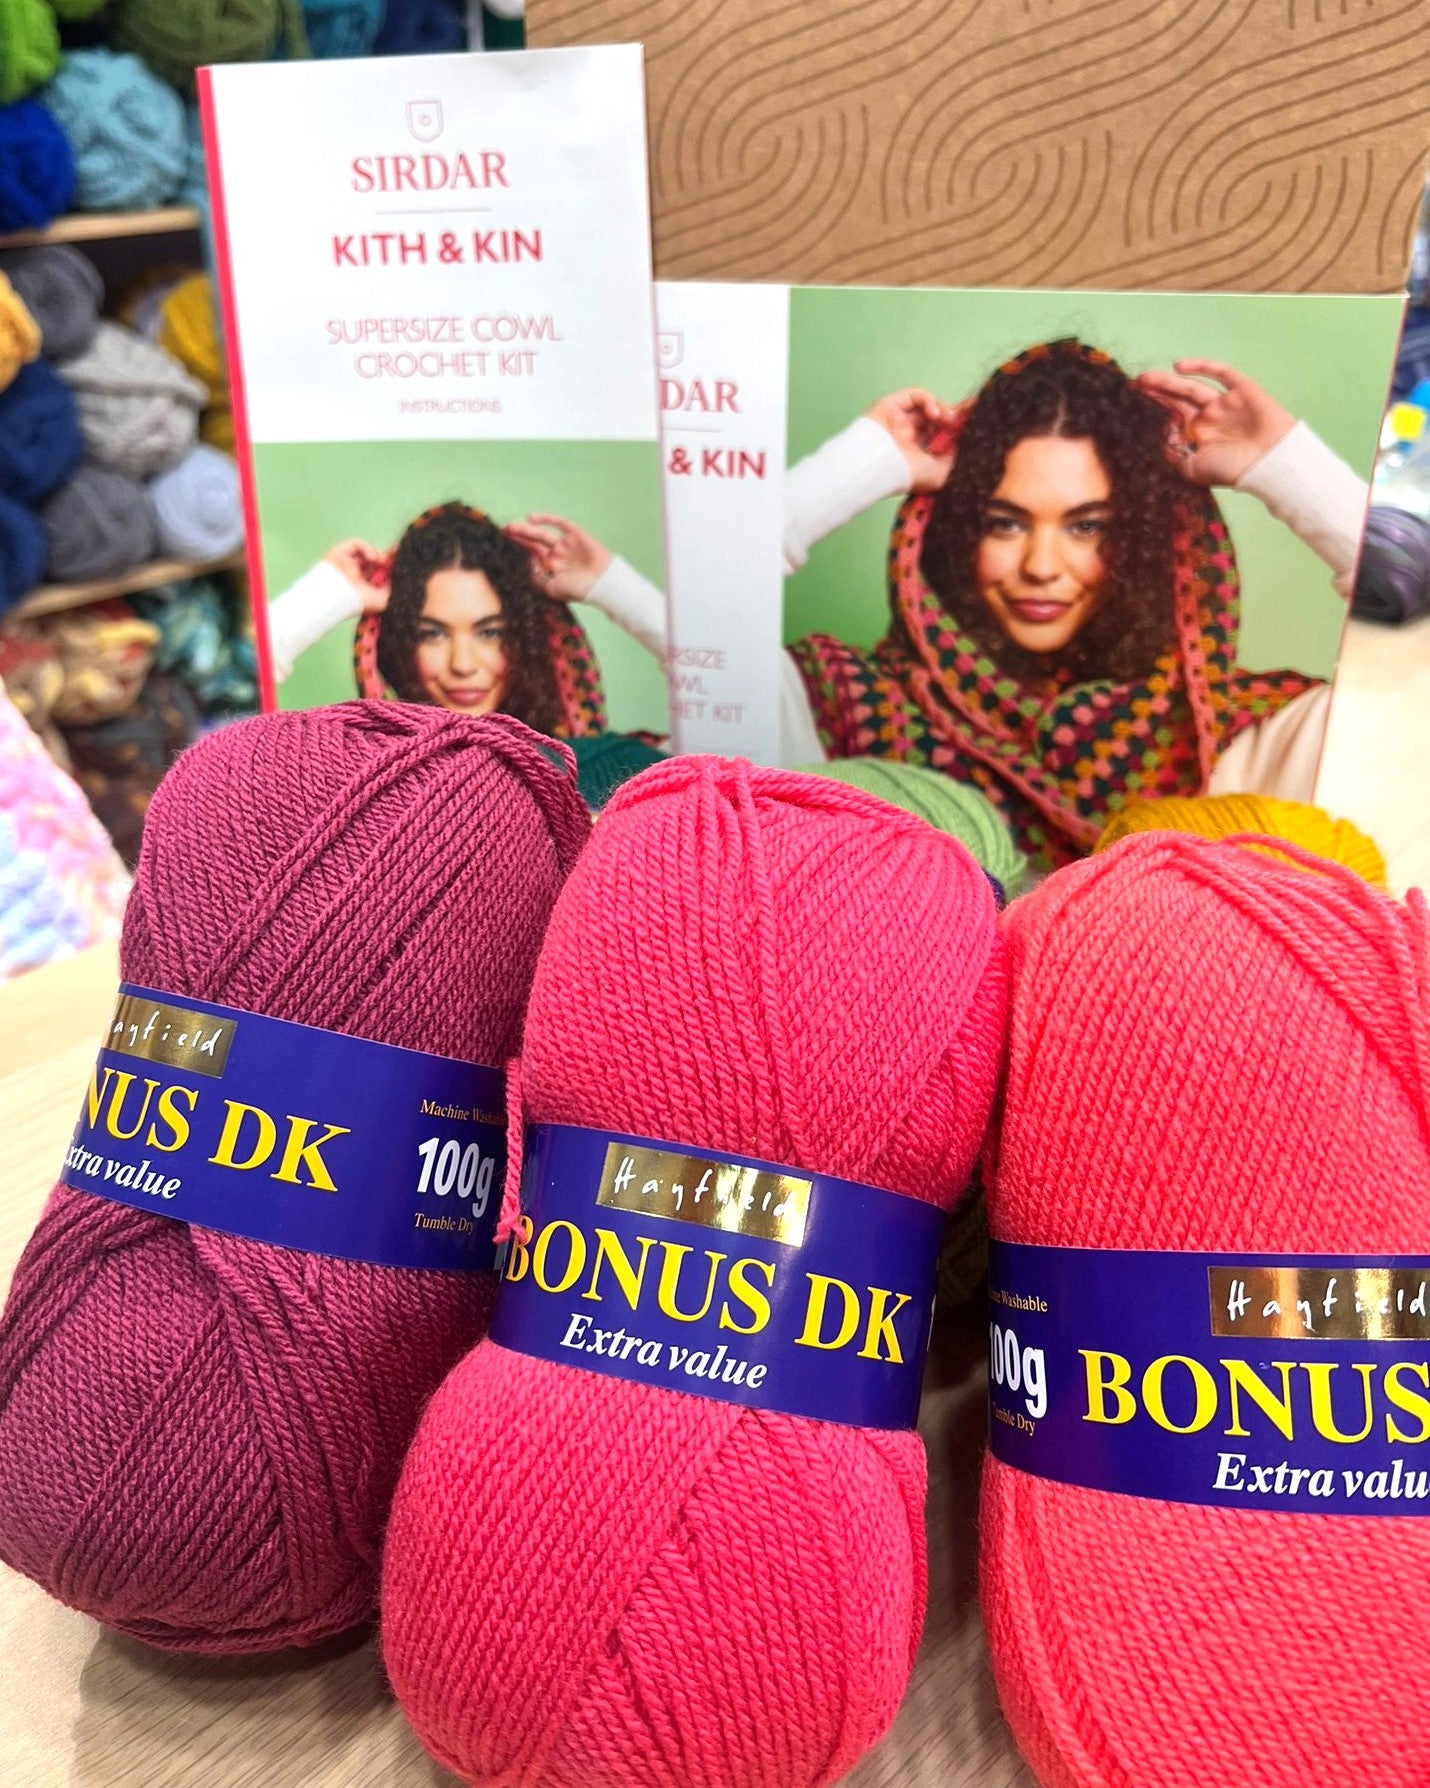 "Kith & Kin" Oversize Cowl Crochet Kit